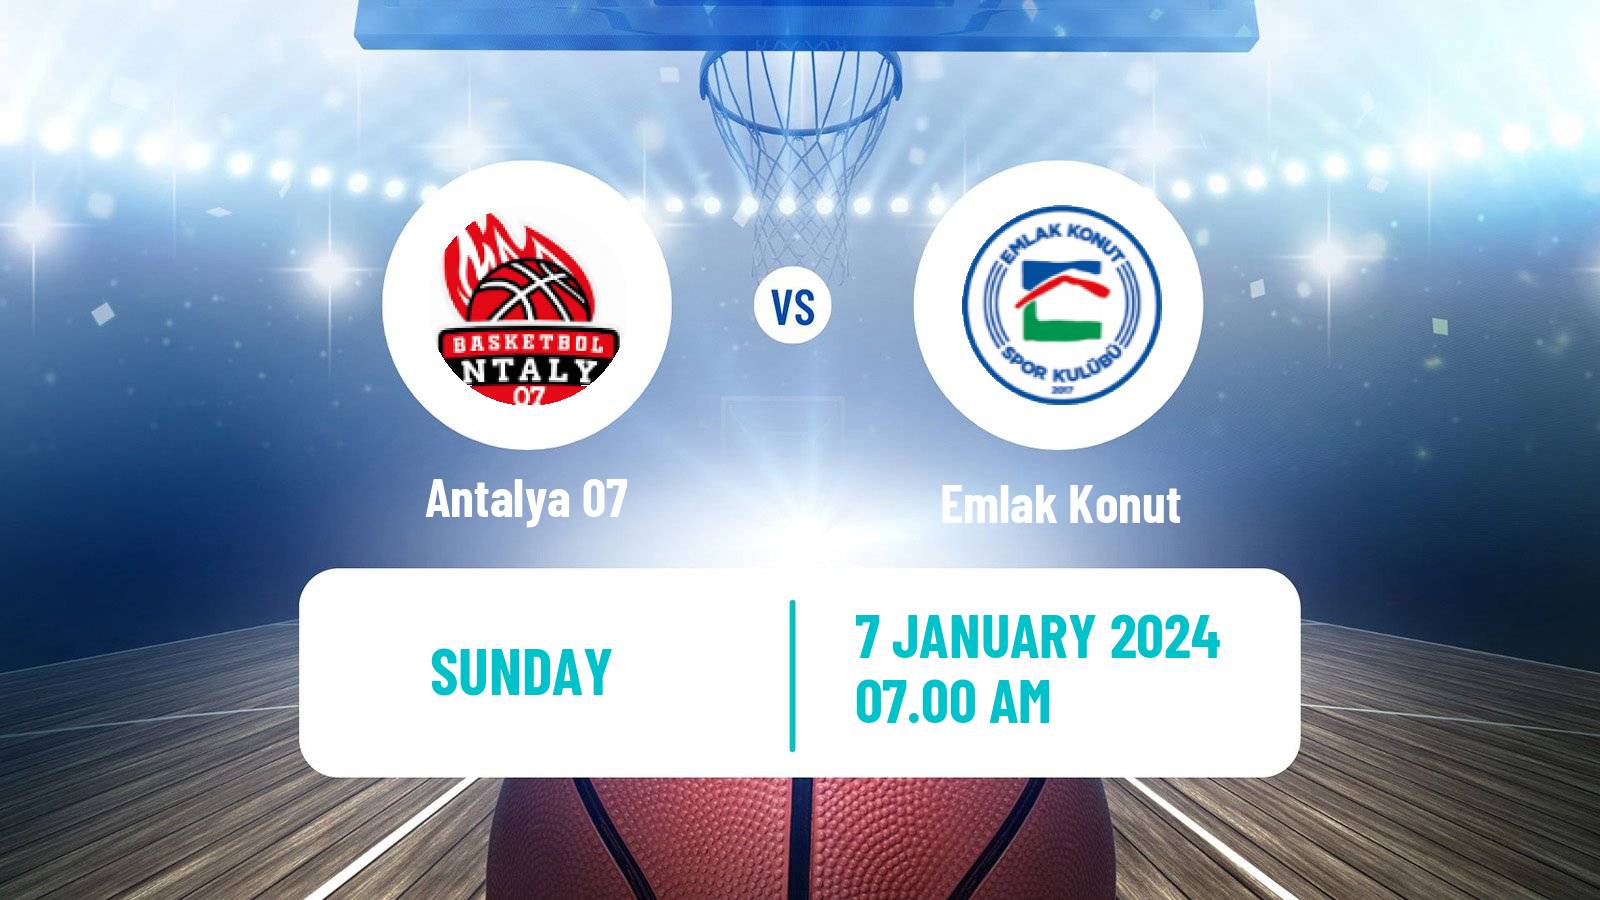 Basketball Turkish Basketball League Women Antalya 07 - Emlak Konut